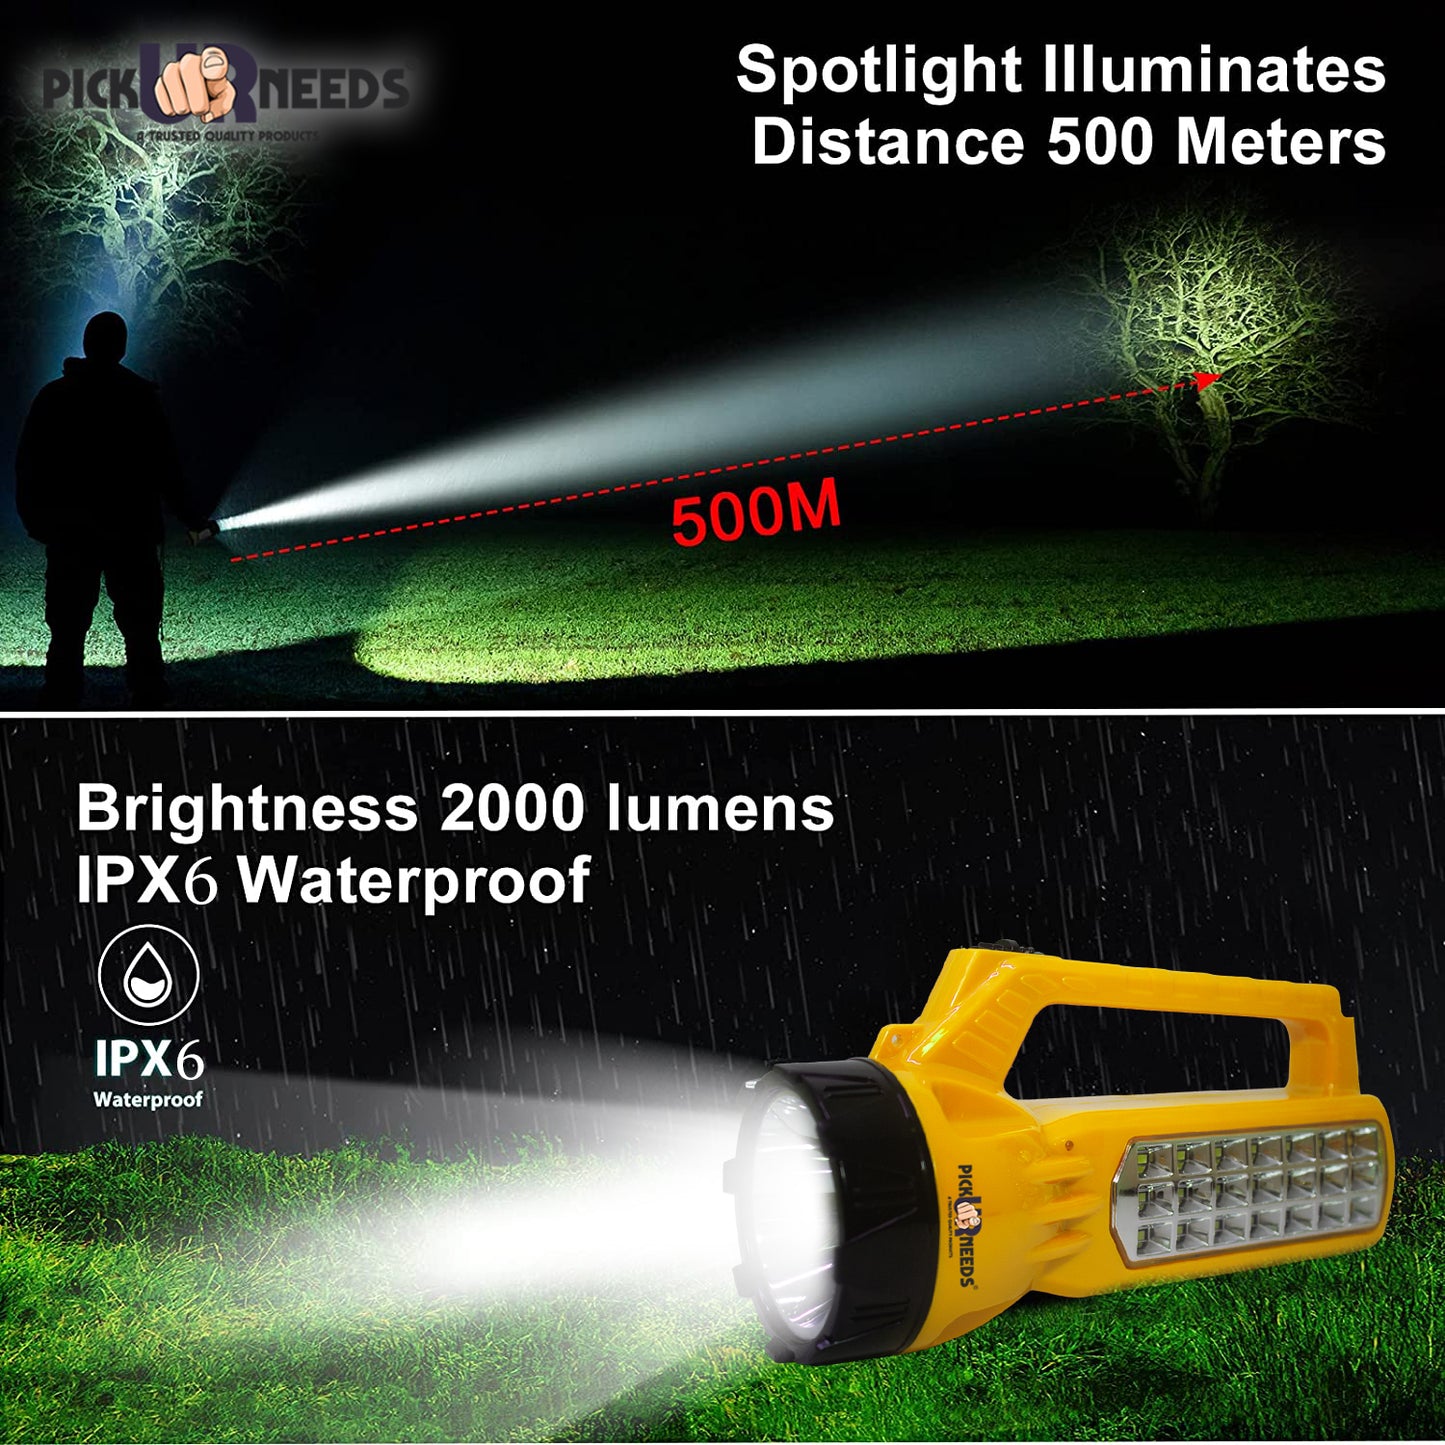 Pick Ur Needs Long Range Search Light 30w Laser +21SMD Side Long Range Emergency Rechargeable Waterproof Bright Led Torch Light